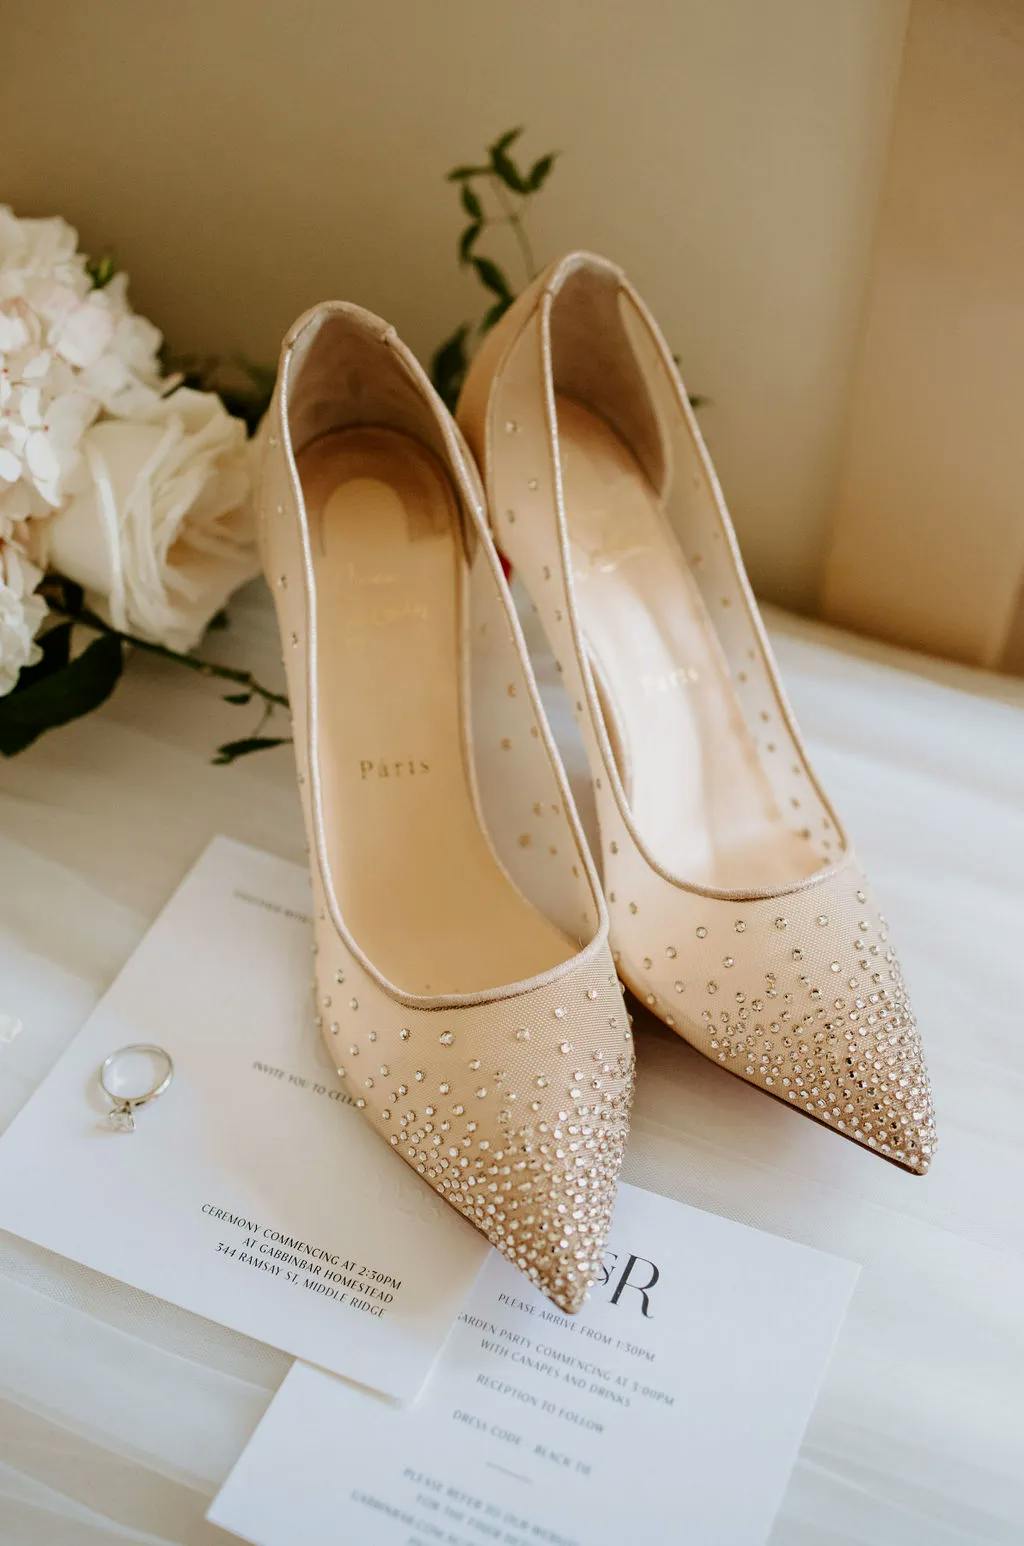 Brides wedding shoes and wedding invitations